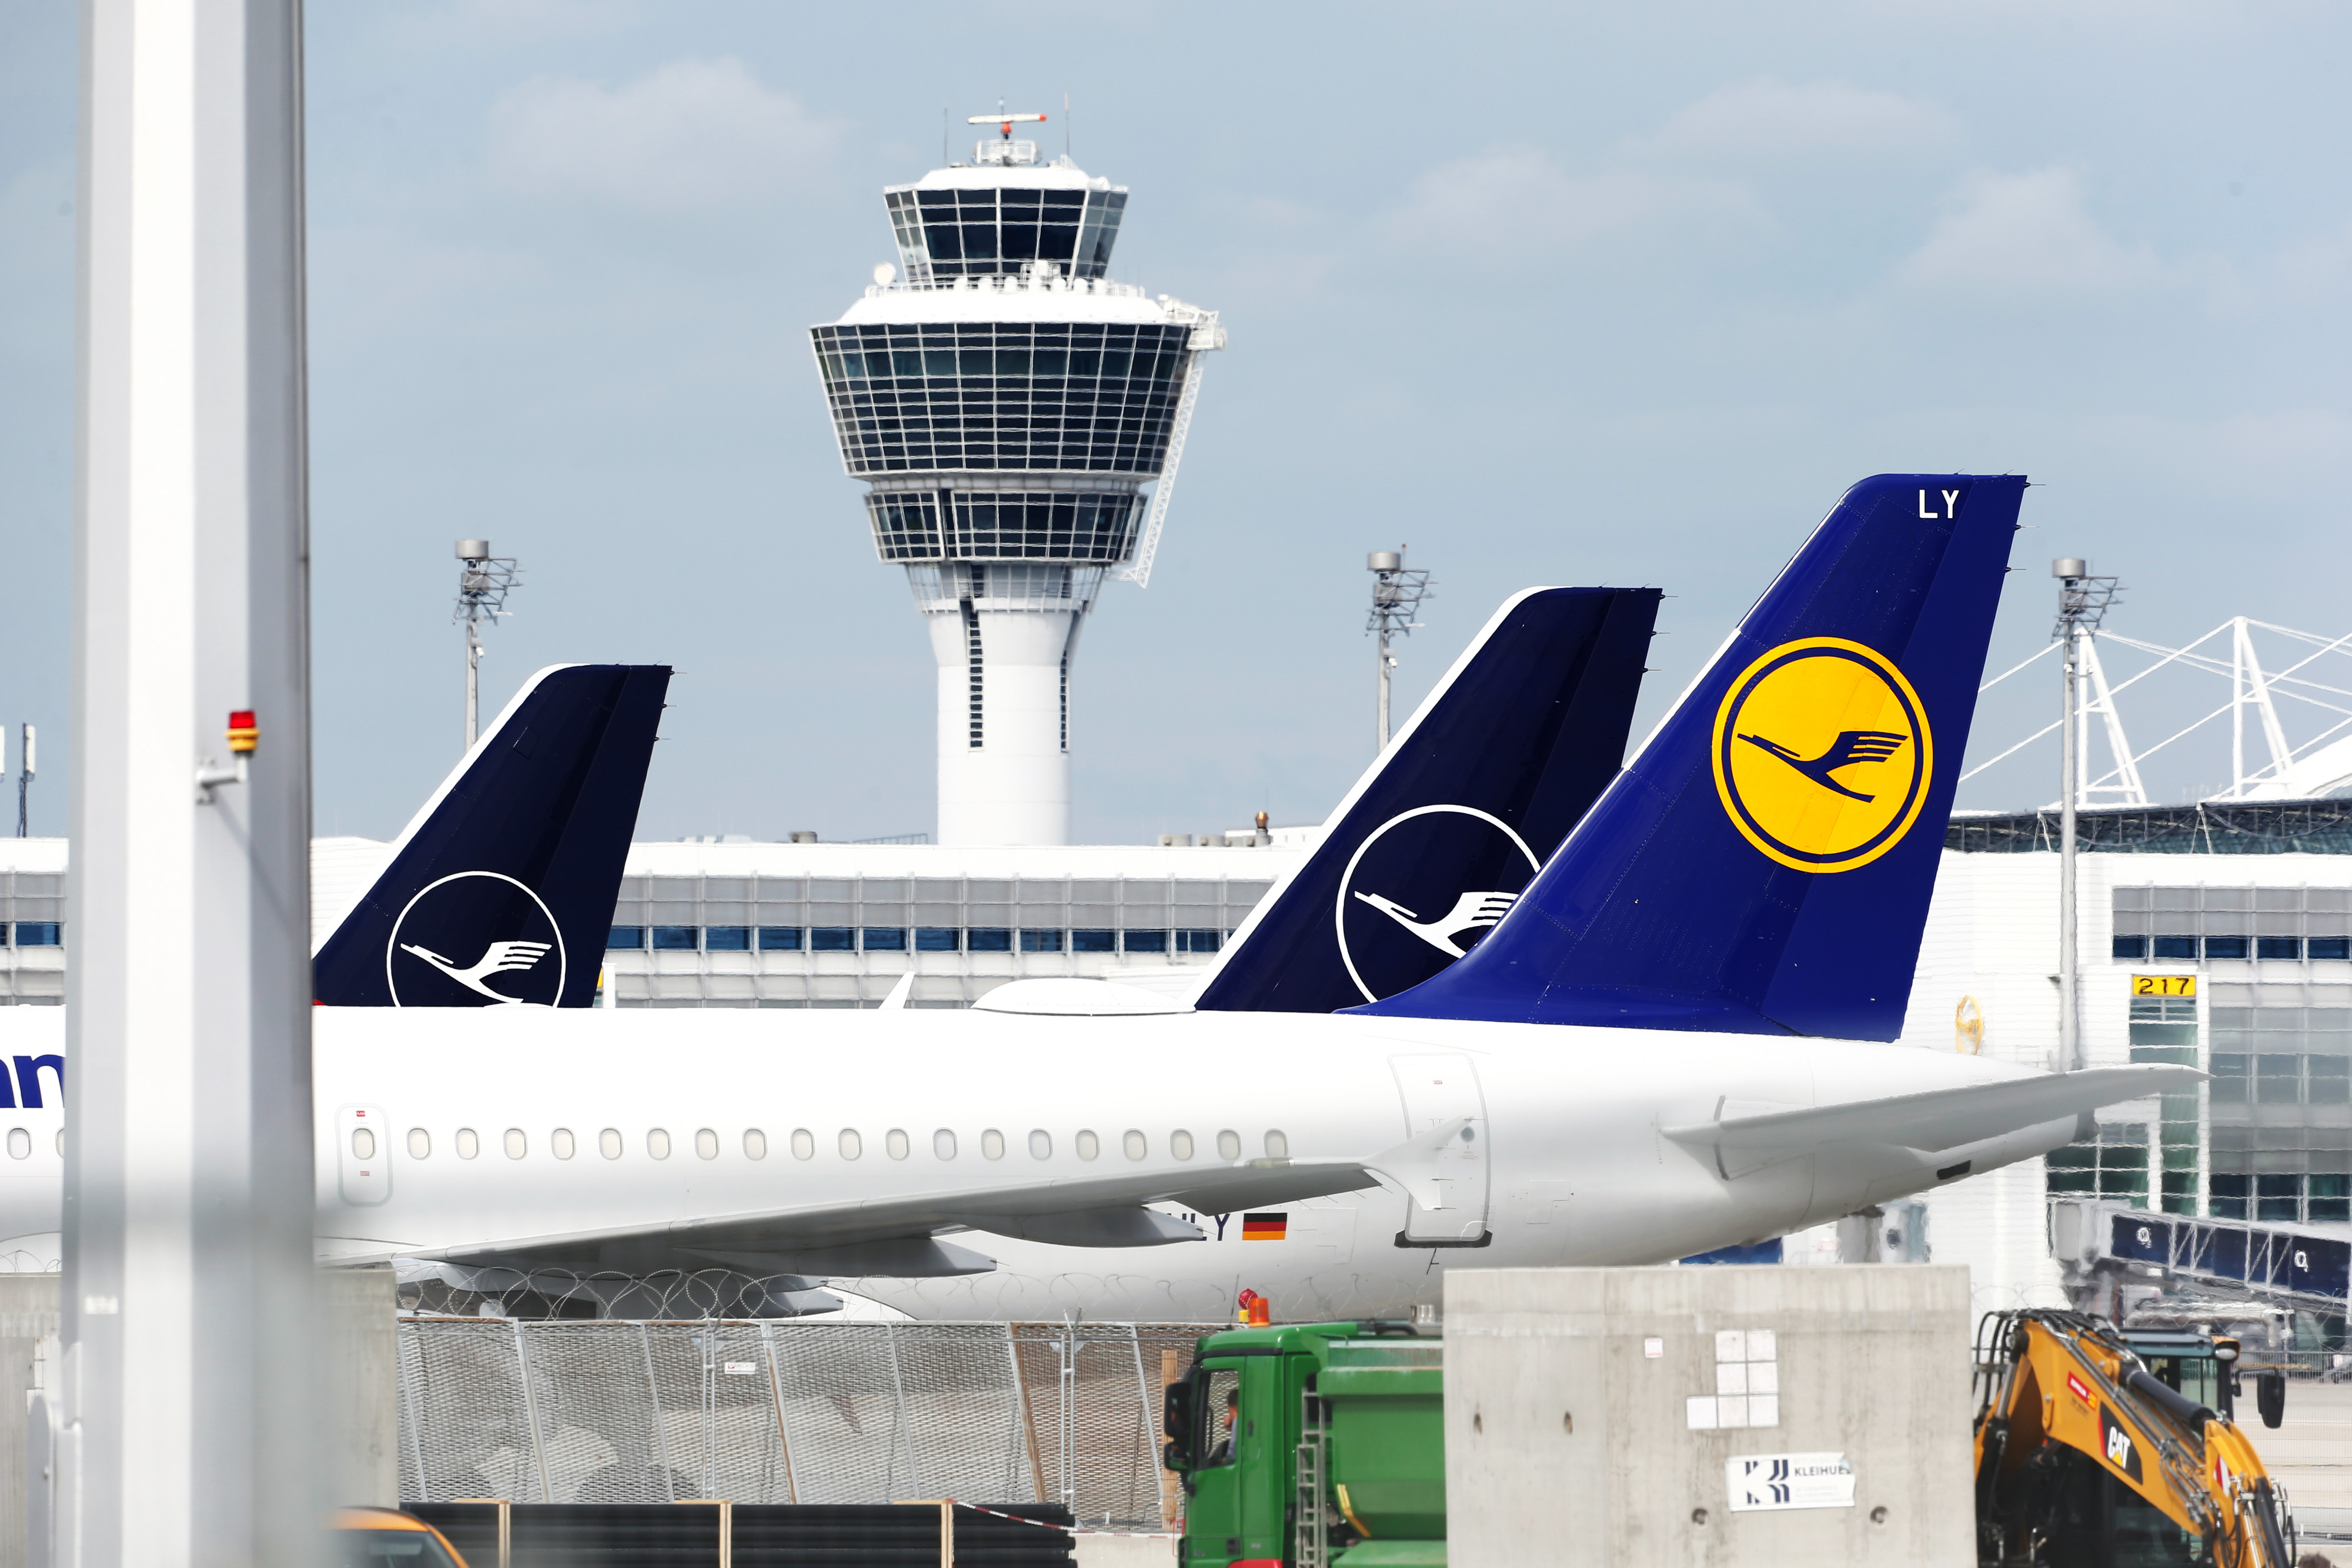 Grounded Deutsche Lufthansa AG passenger aircraft sit near the control tower at Munich Airport.